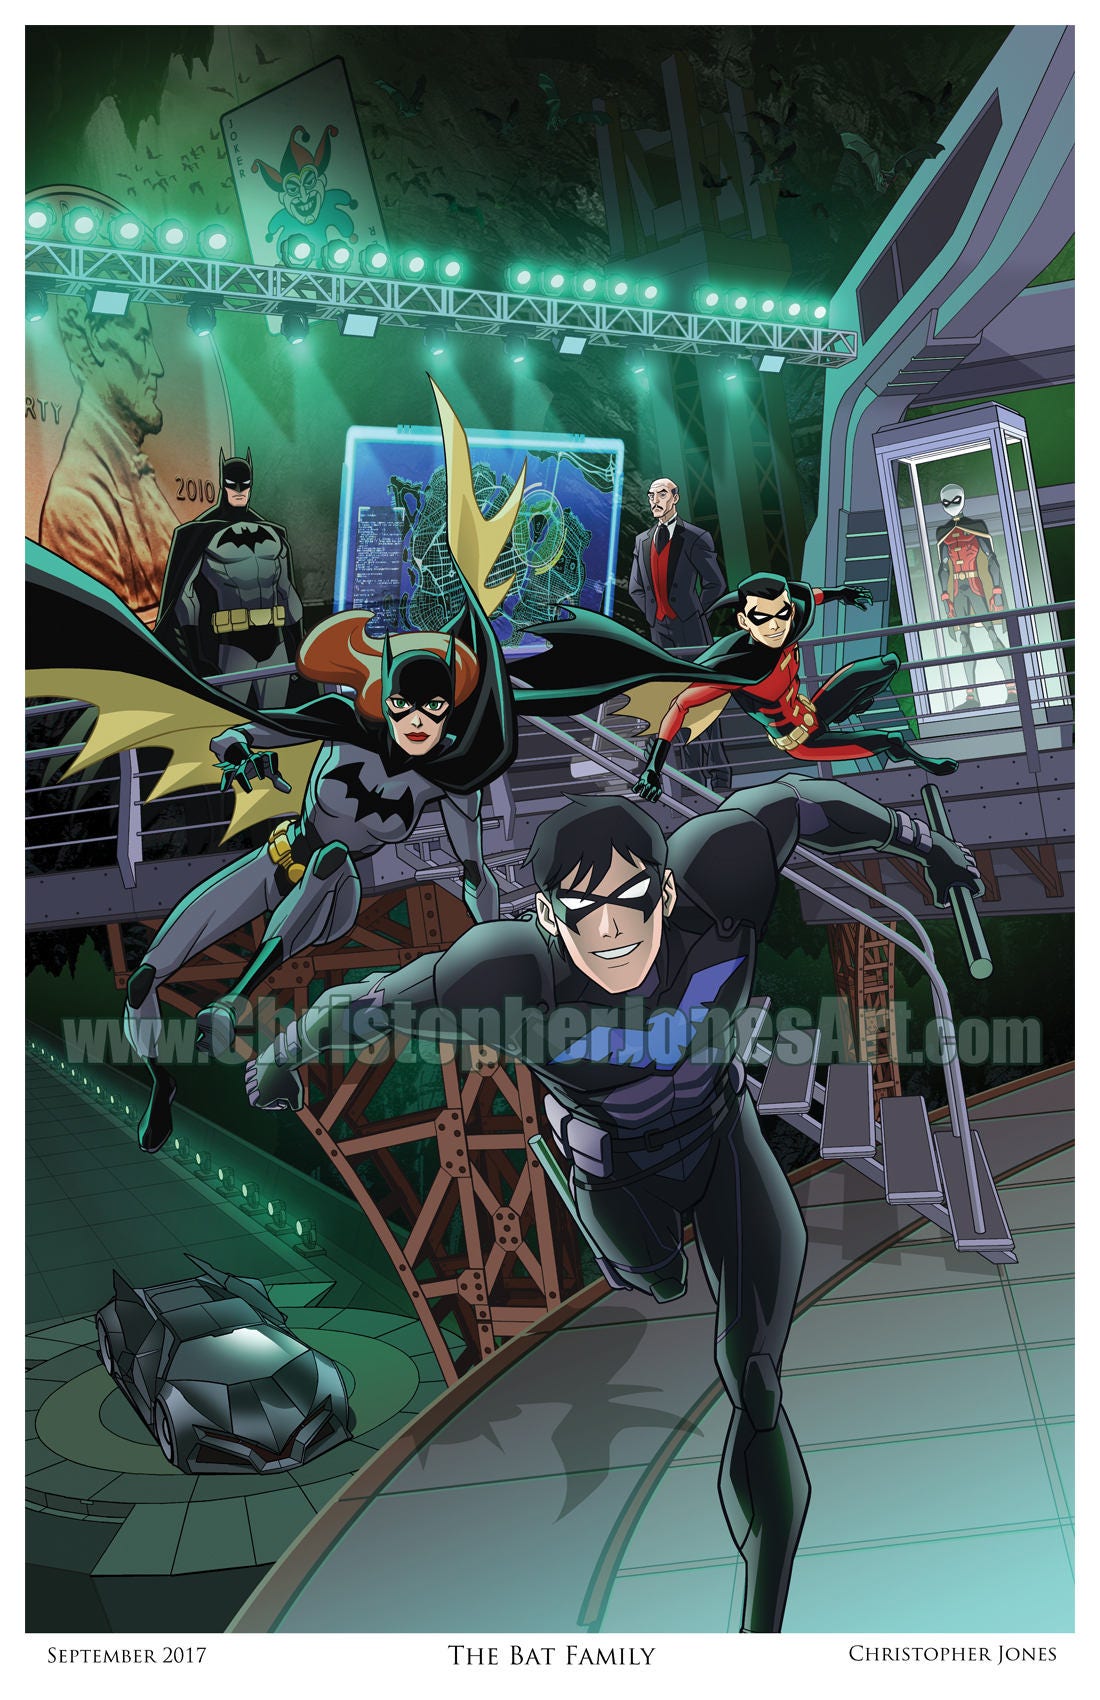 The Bat Family image